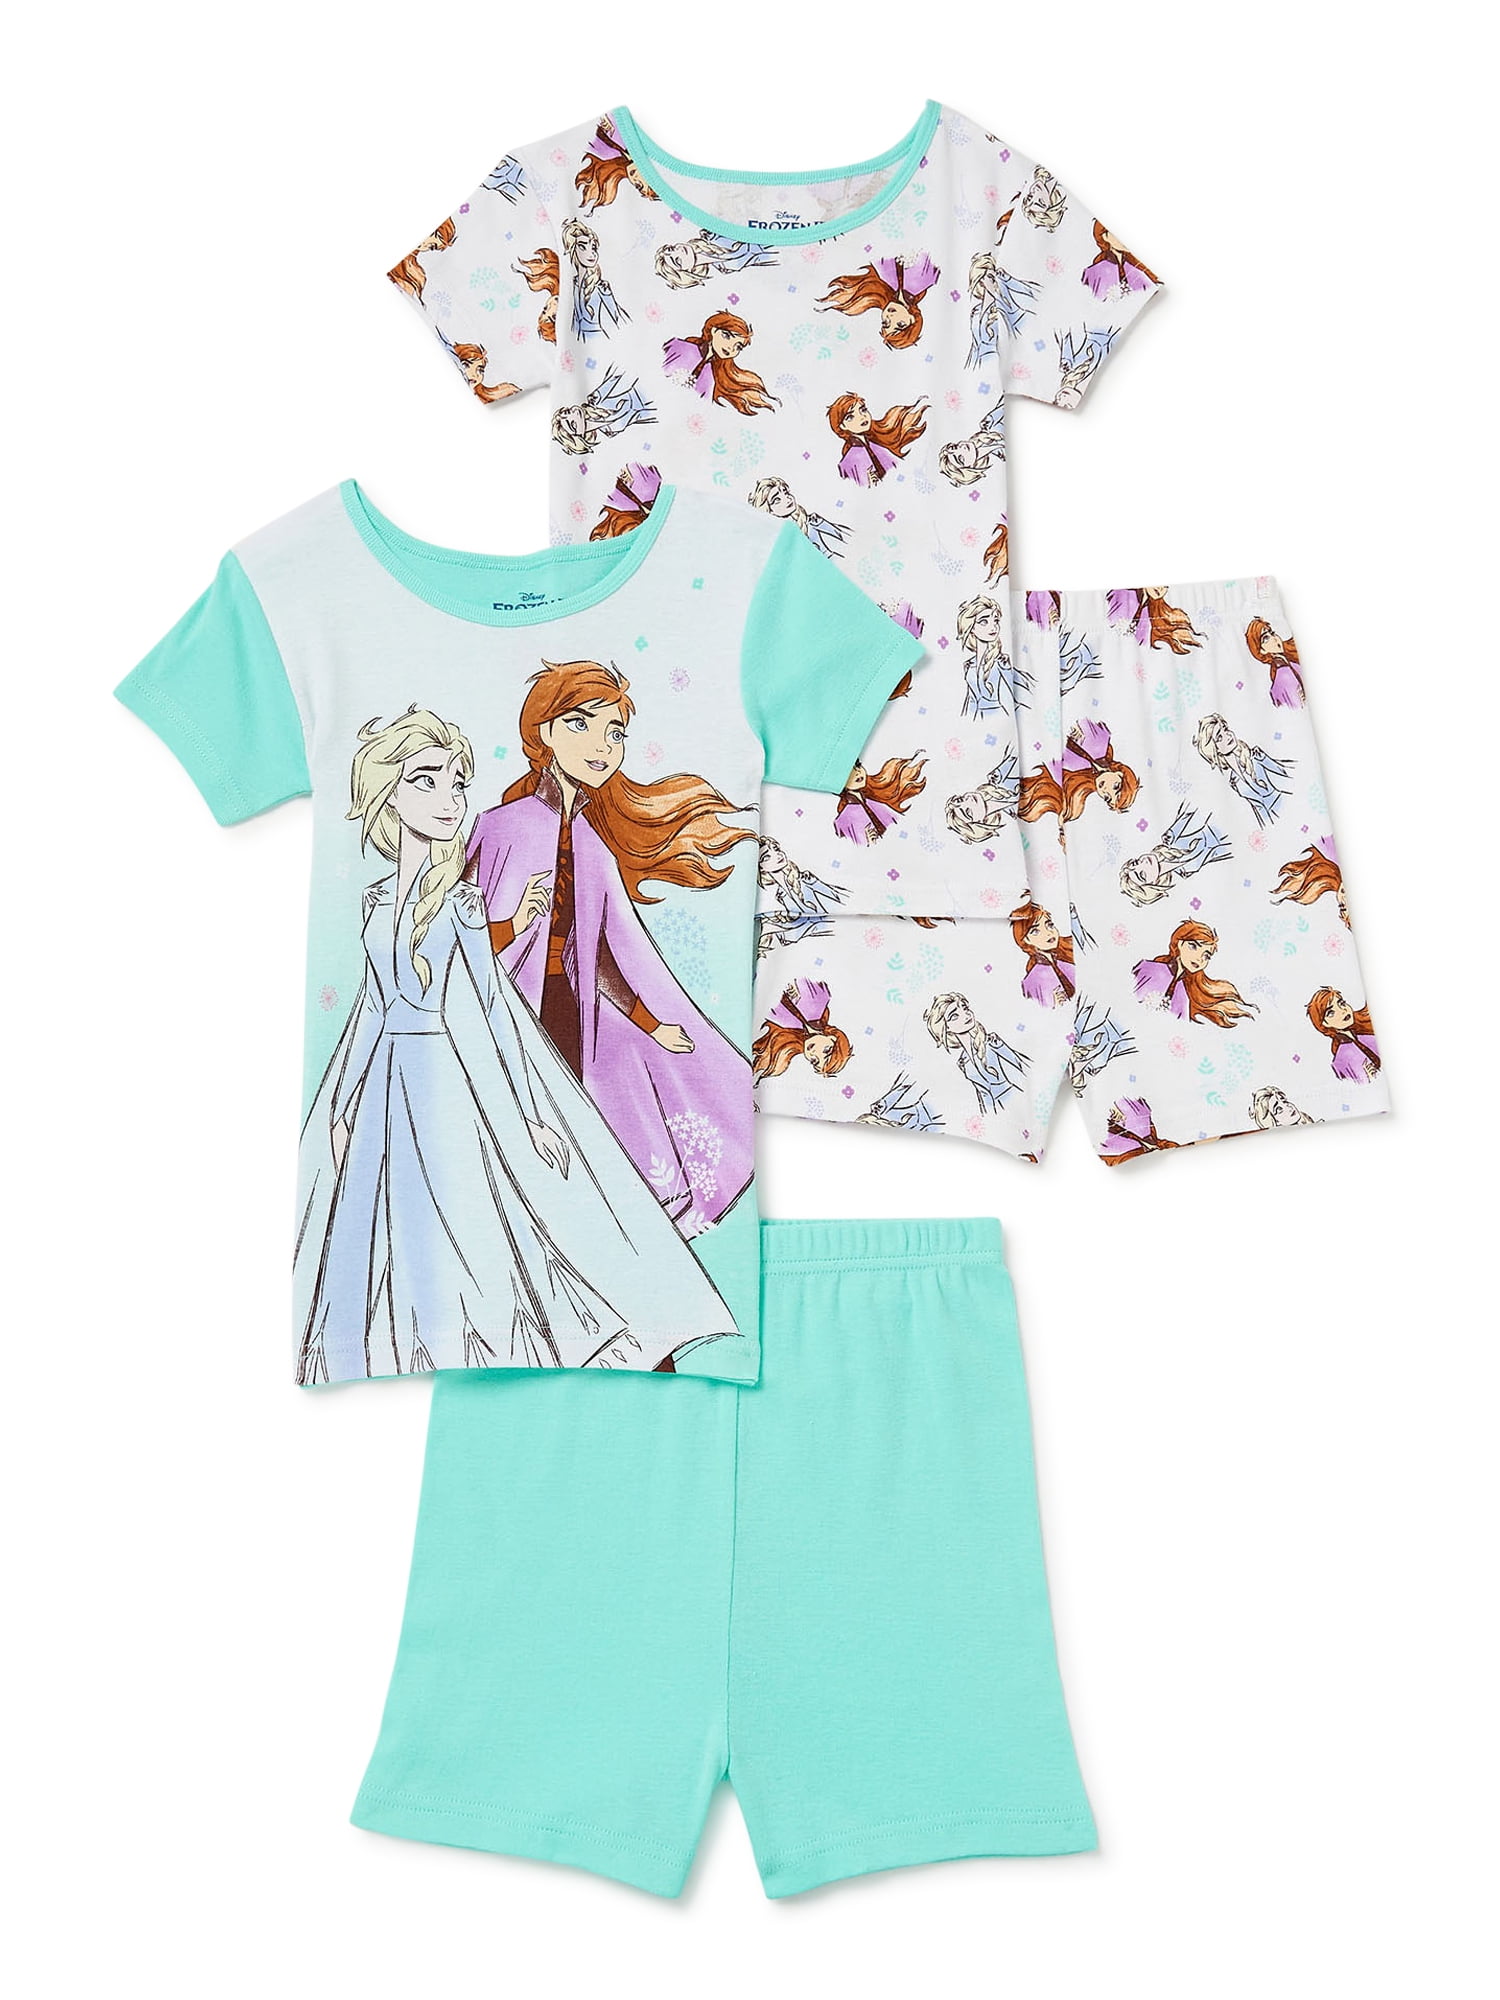 Frozen Anna & Elsa Toddler Girl Short Sleeve Shirt & Pants Pajamas PJs New 5T 